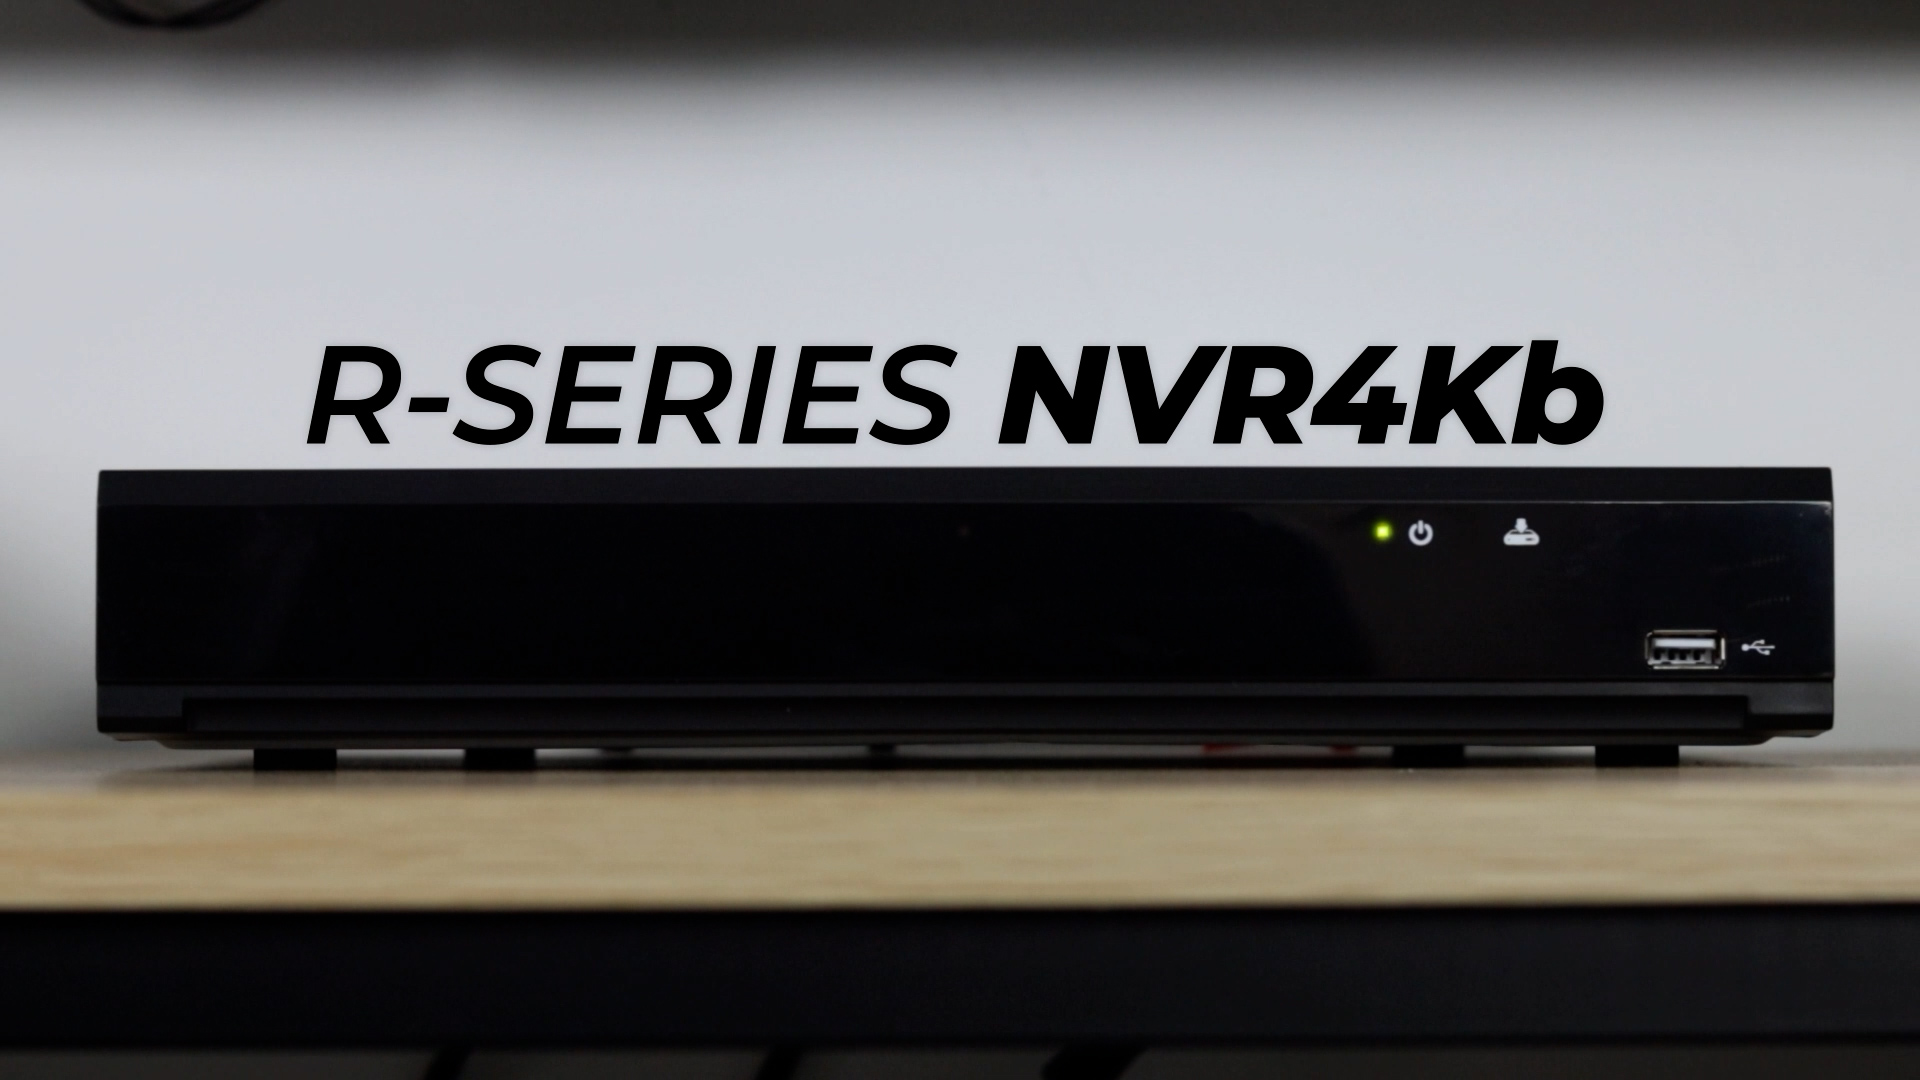 NVR4Kb external storage